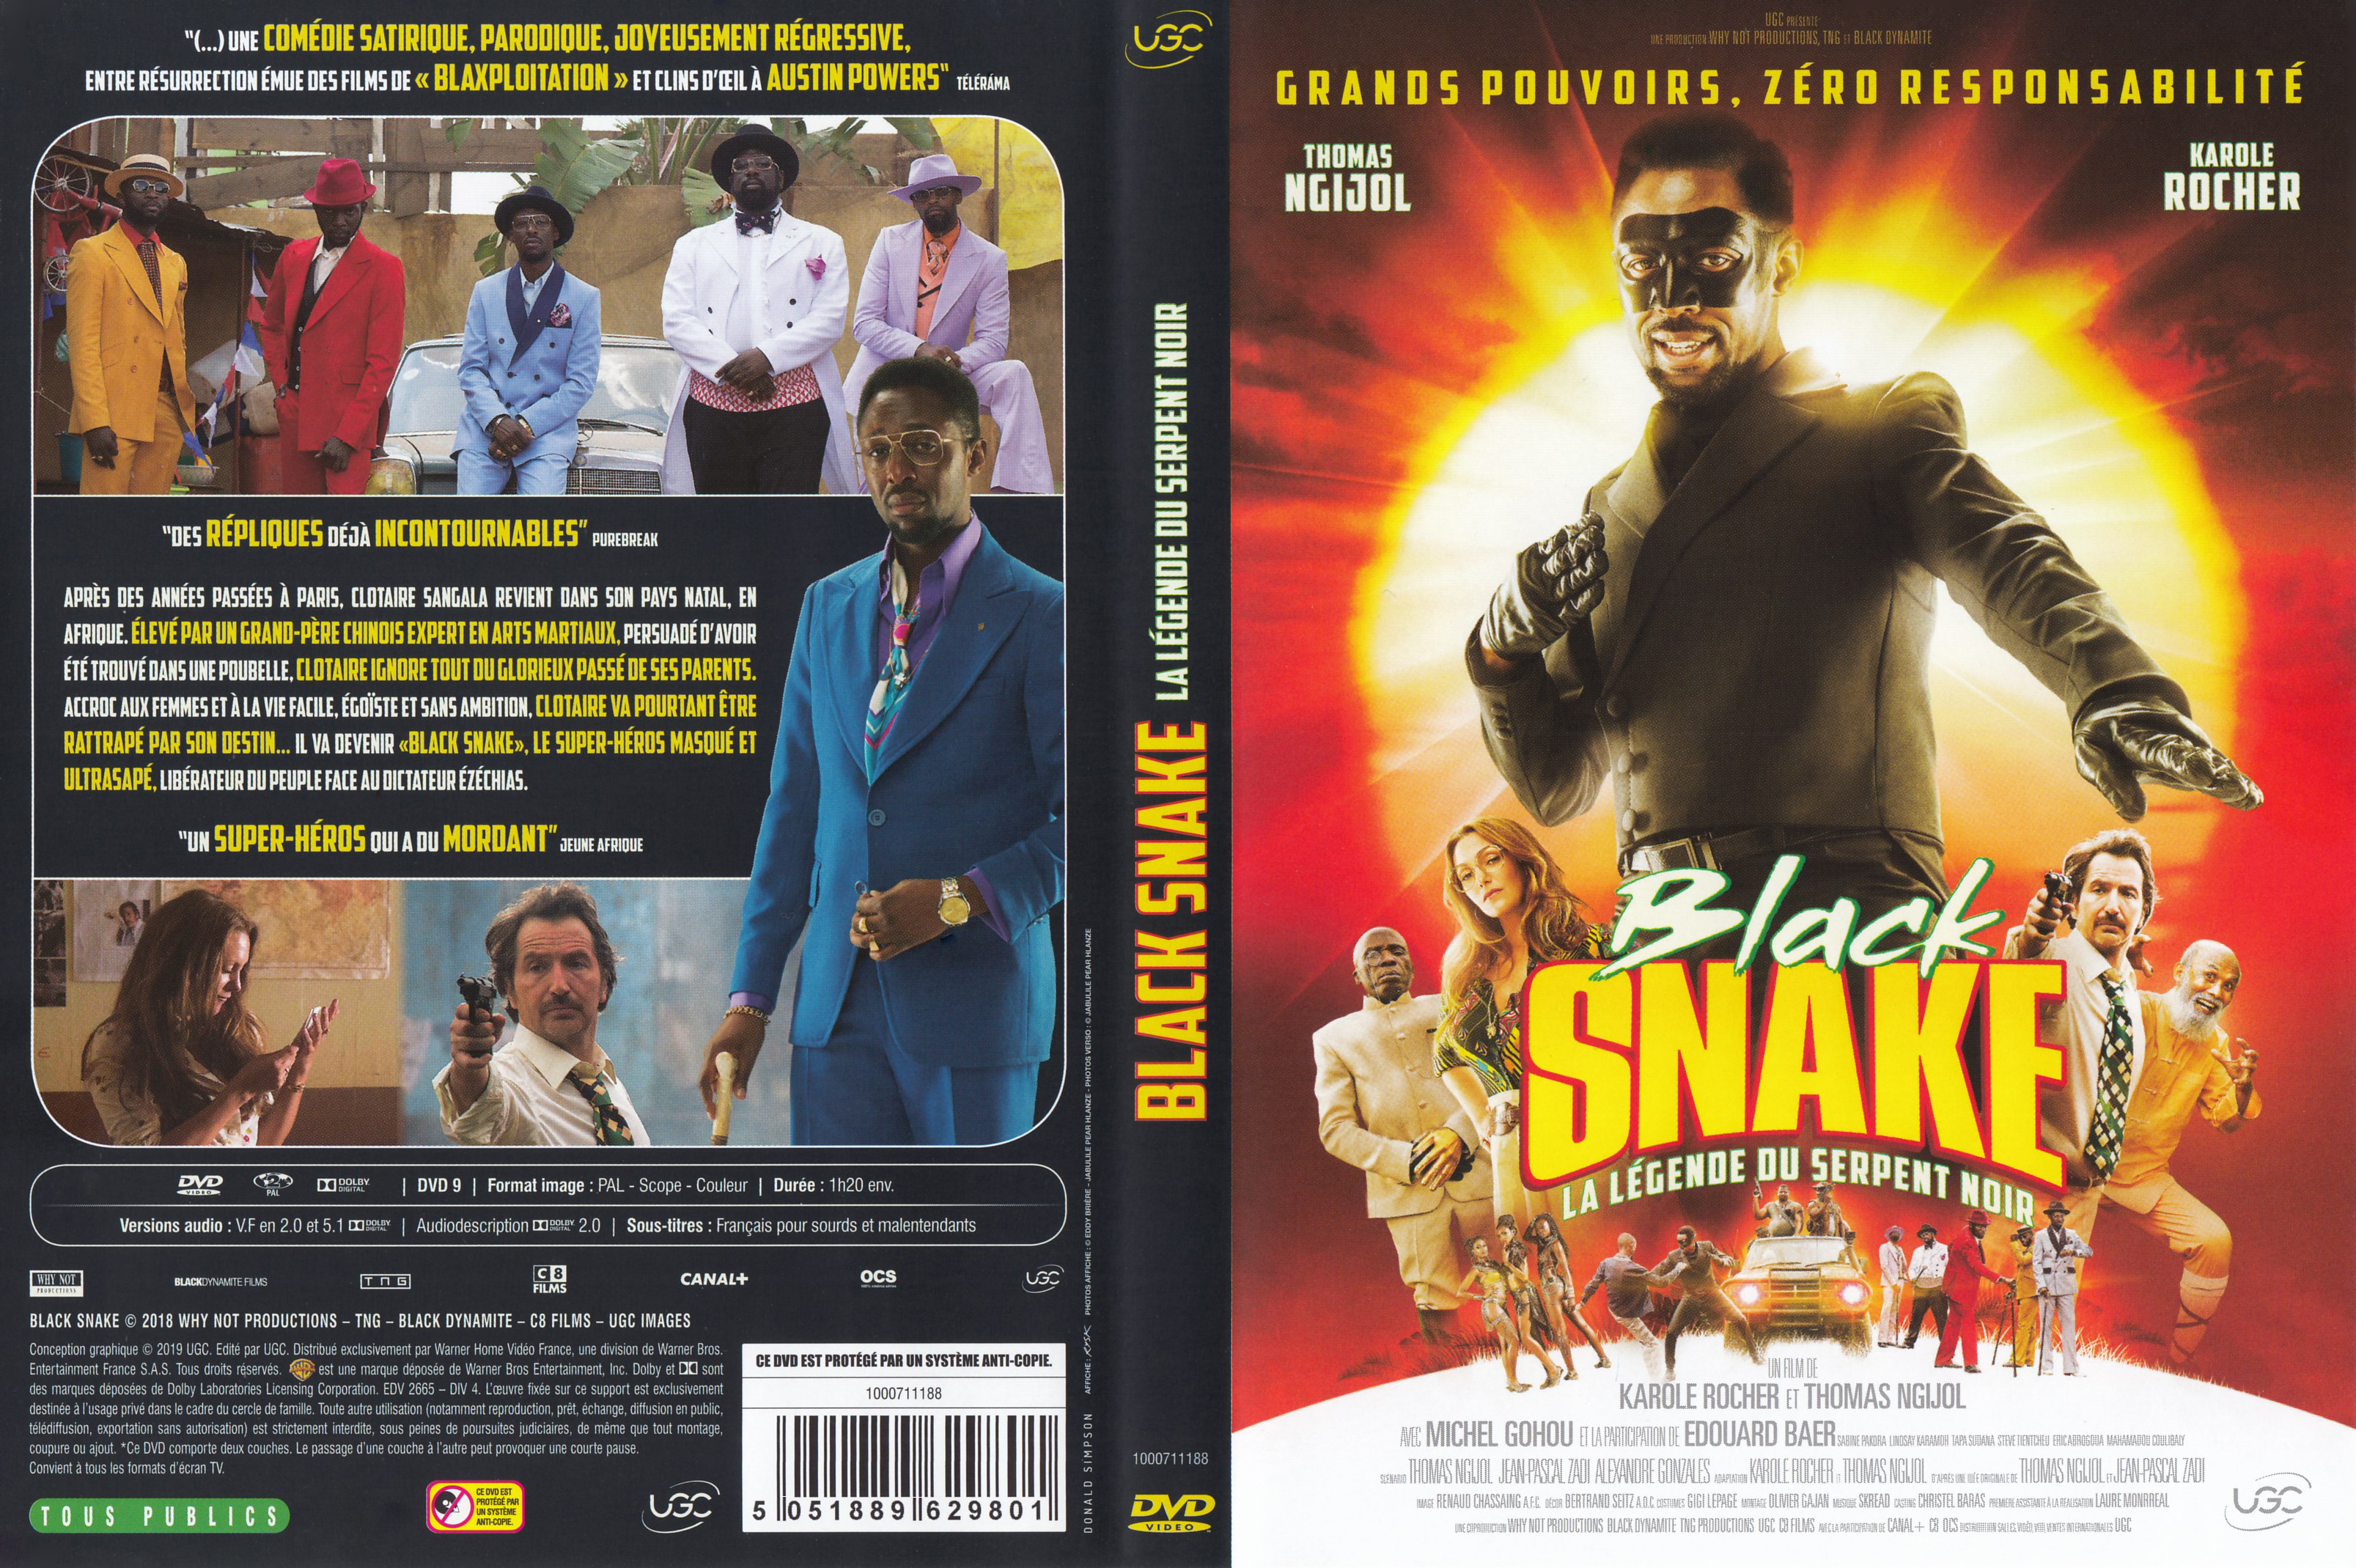 Jaquette DVD Black snake la legende du serpent noir